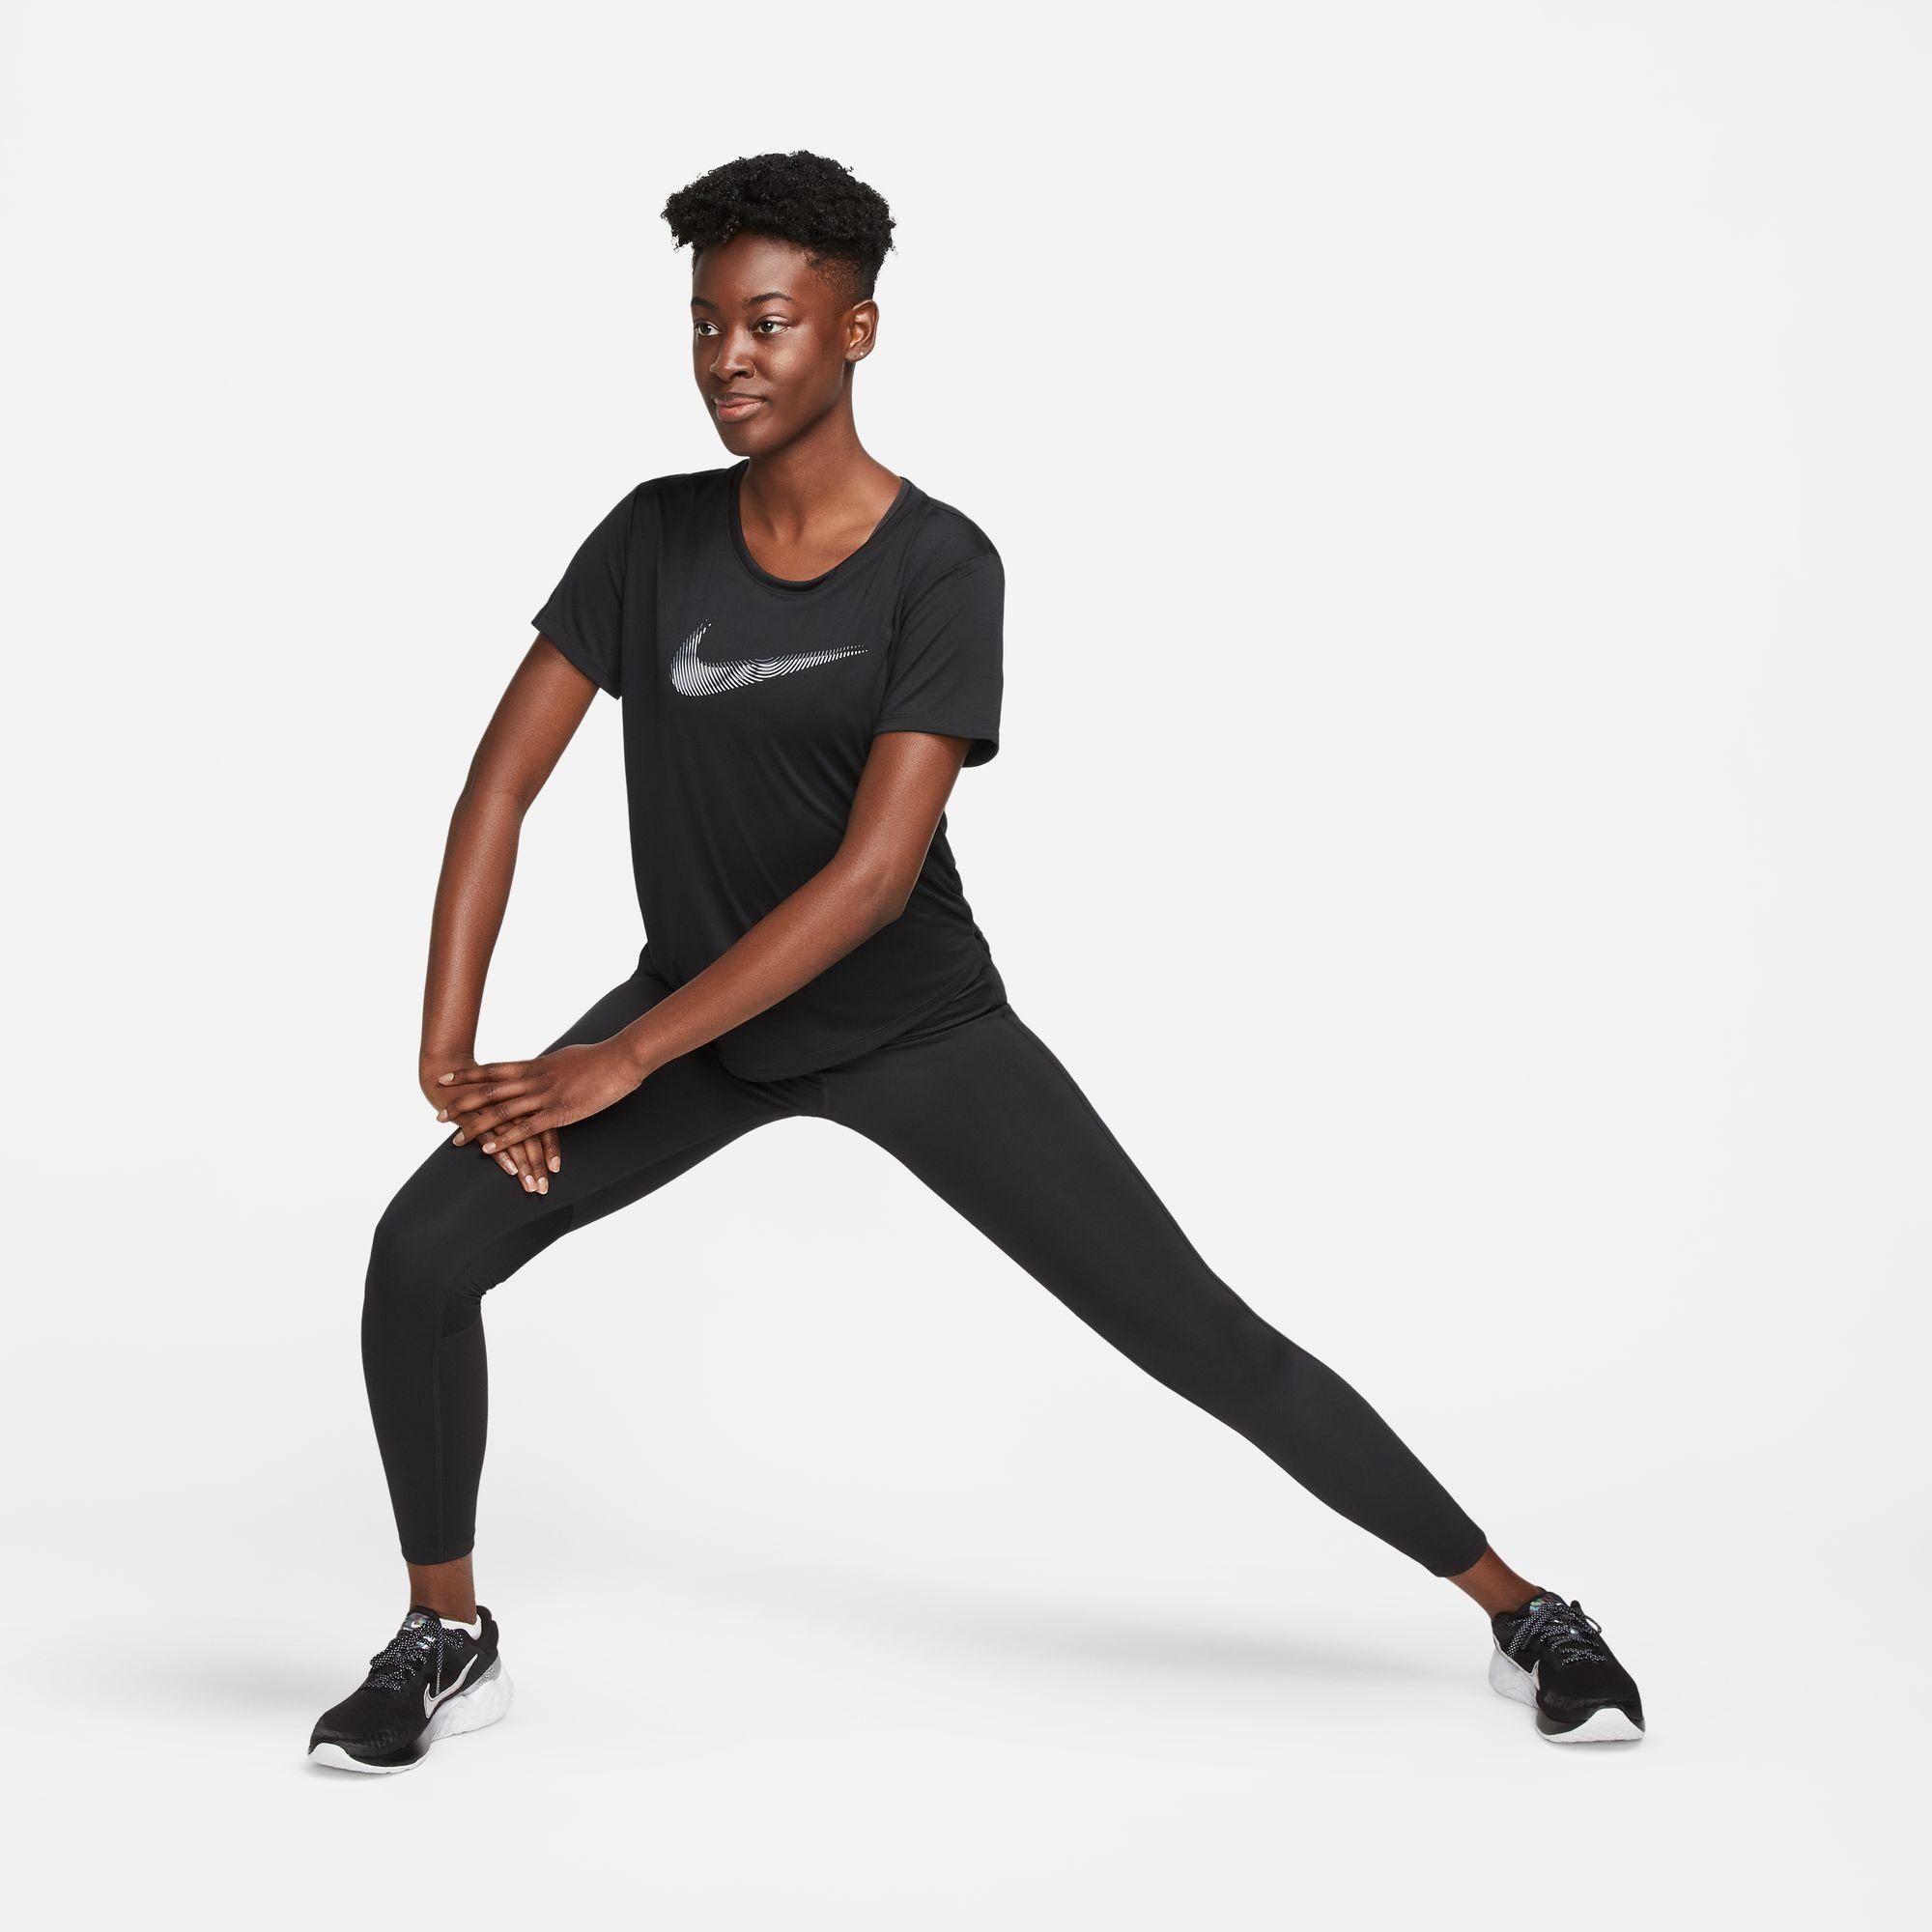 SWOOSH Laufshirt Nike RUNNING BLACK/COOL GREY TOP WOMEN'S SHORT-SLEEVE DRI-FIT